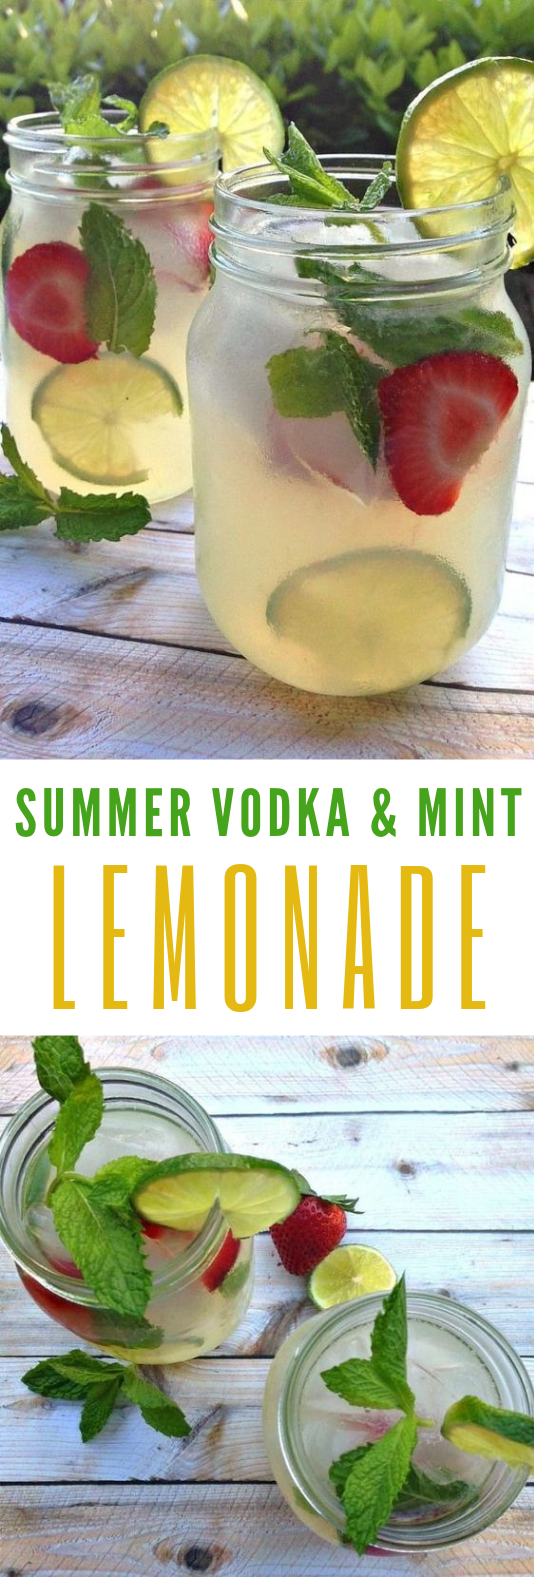 Refreshing Summer Drinks: Vodka Mint Lemonade Cocktail With Stoli #Cocktail #SummerDrinks